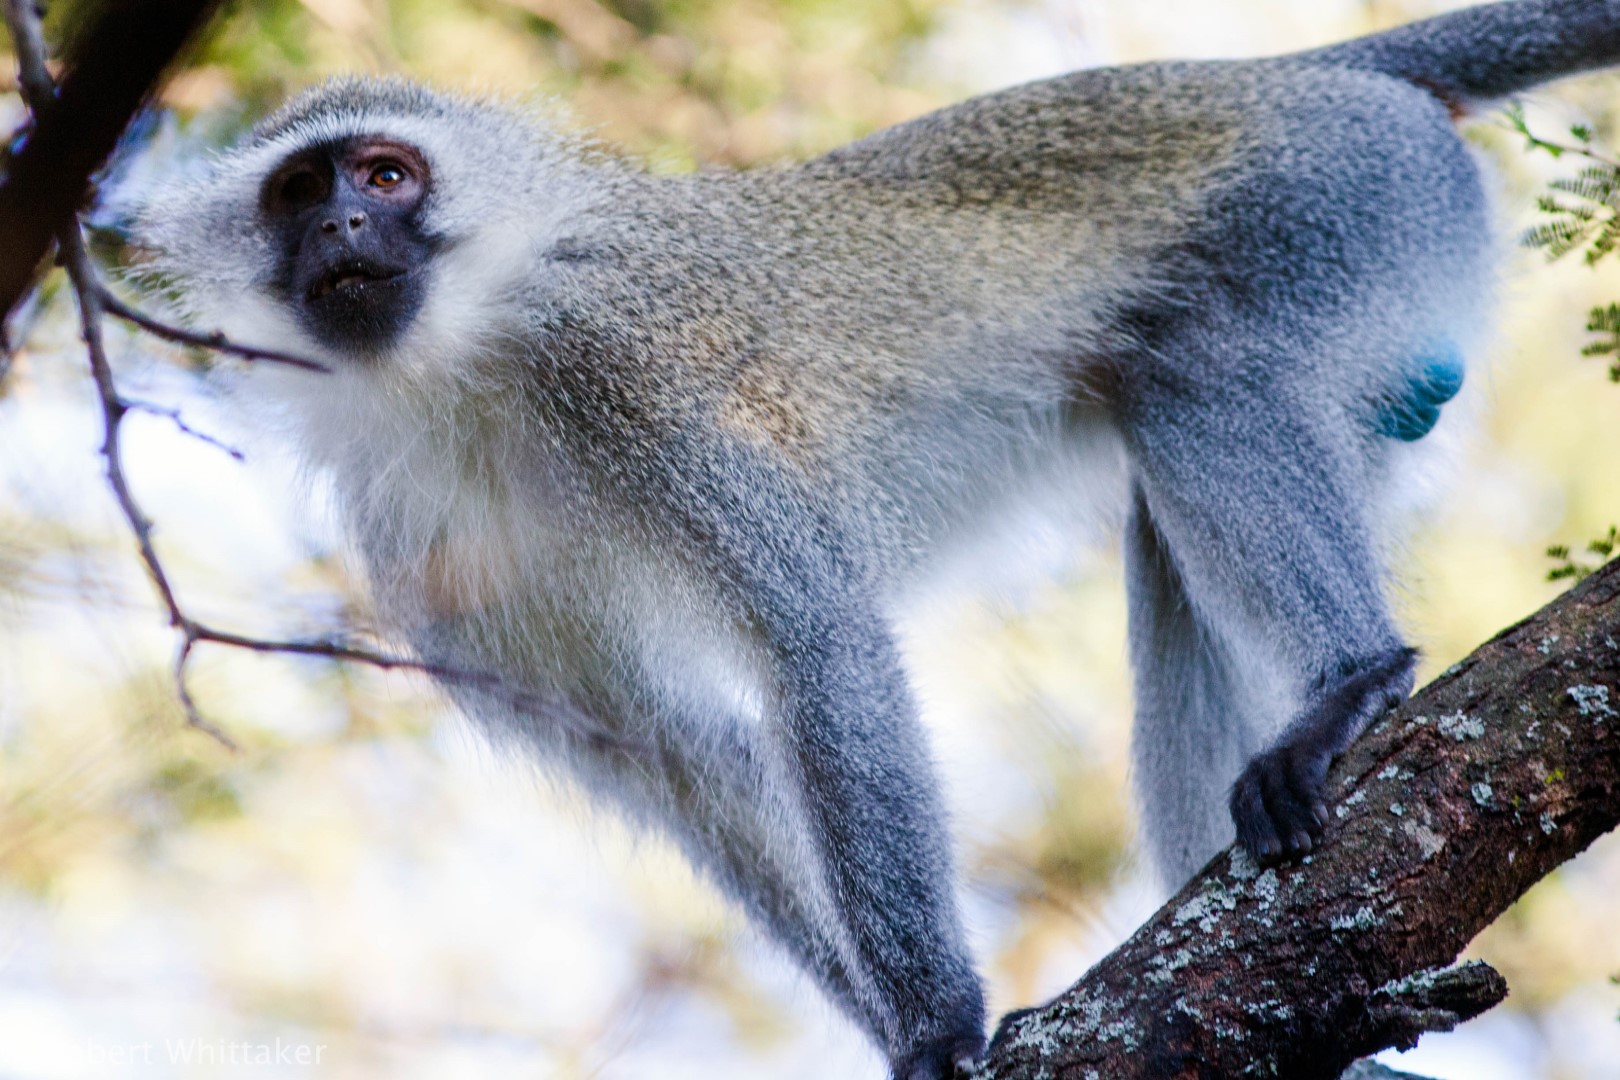 Vervet Monkeys popularly found around Rwenzori Mountains